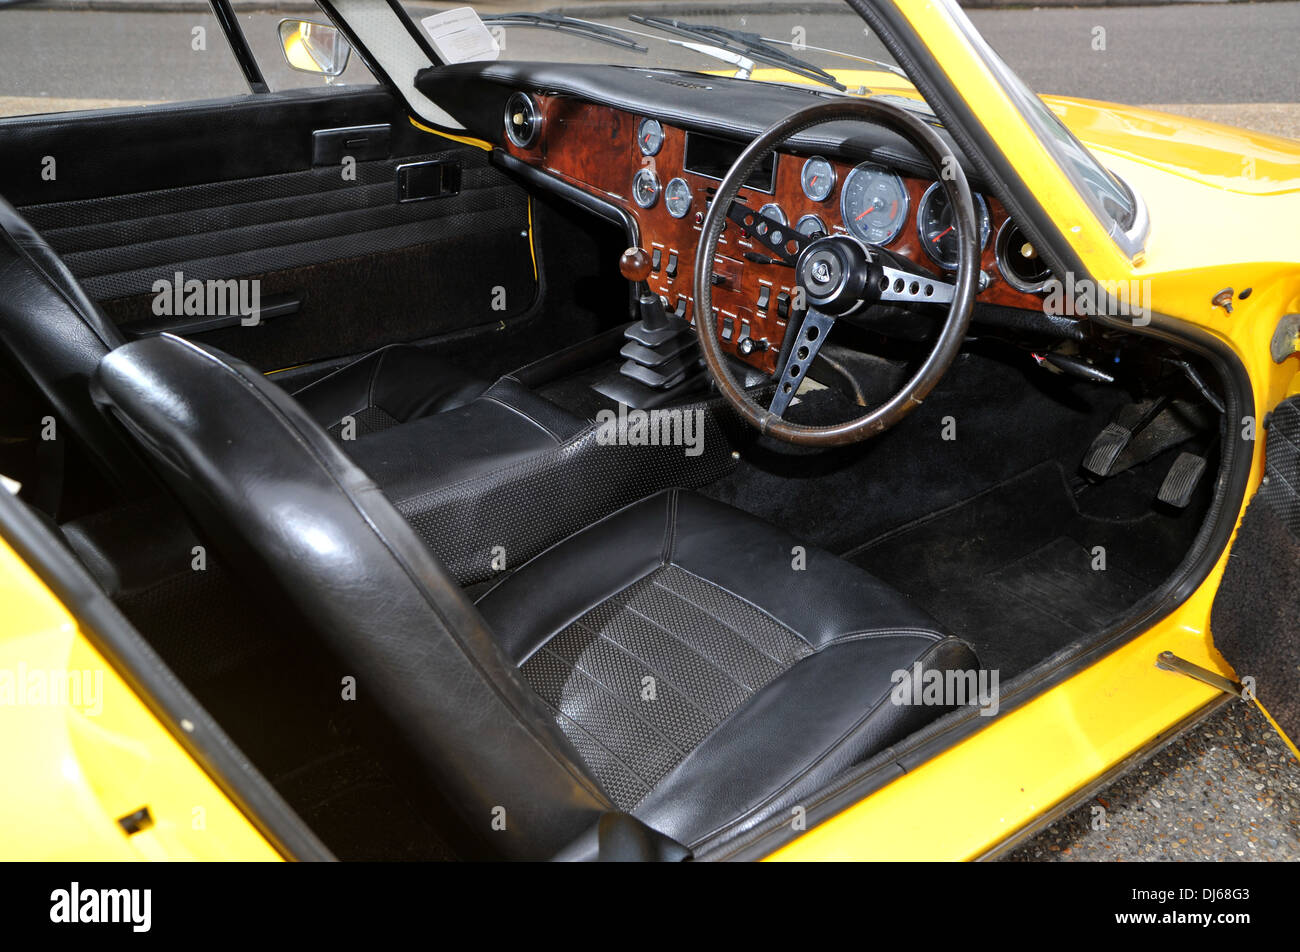 1973 Lotus Elan 2+2 classic sports car Stock Photo